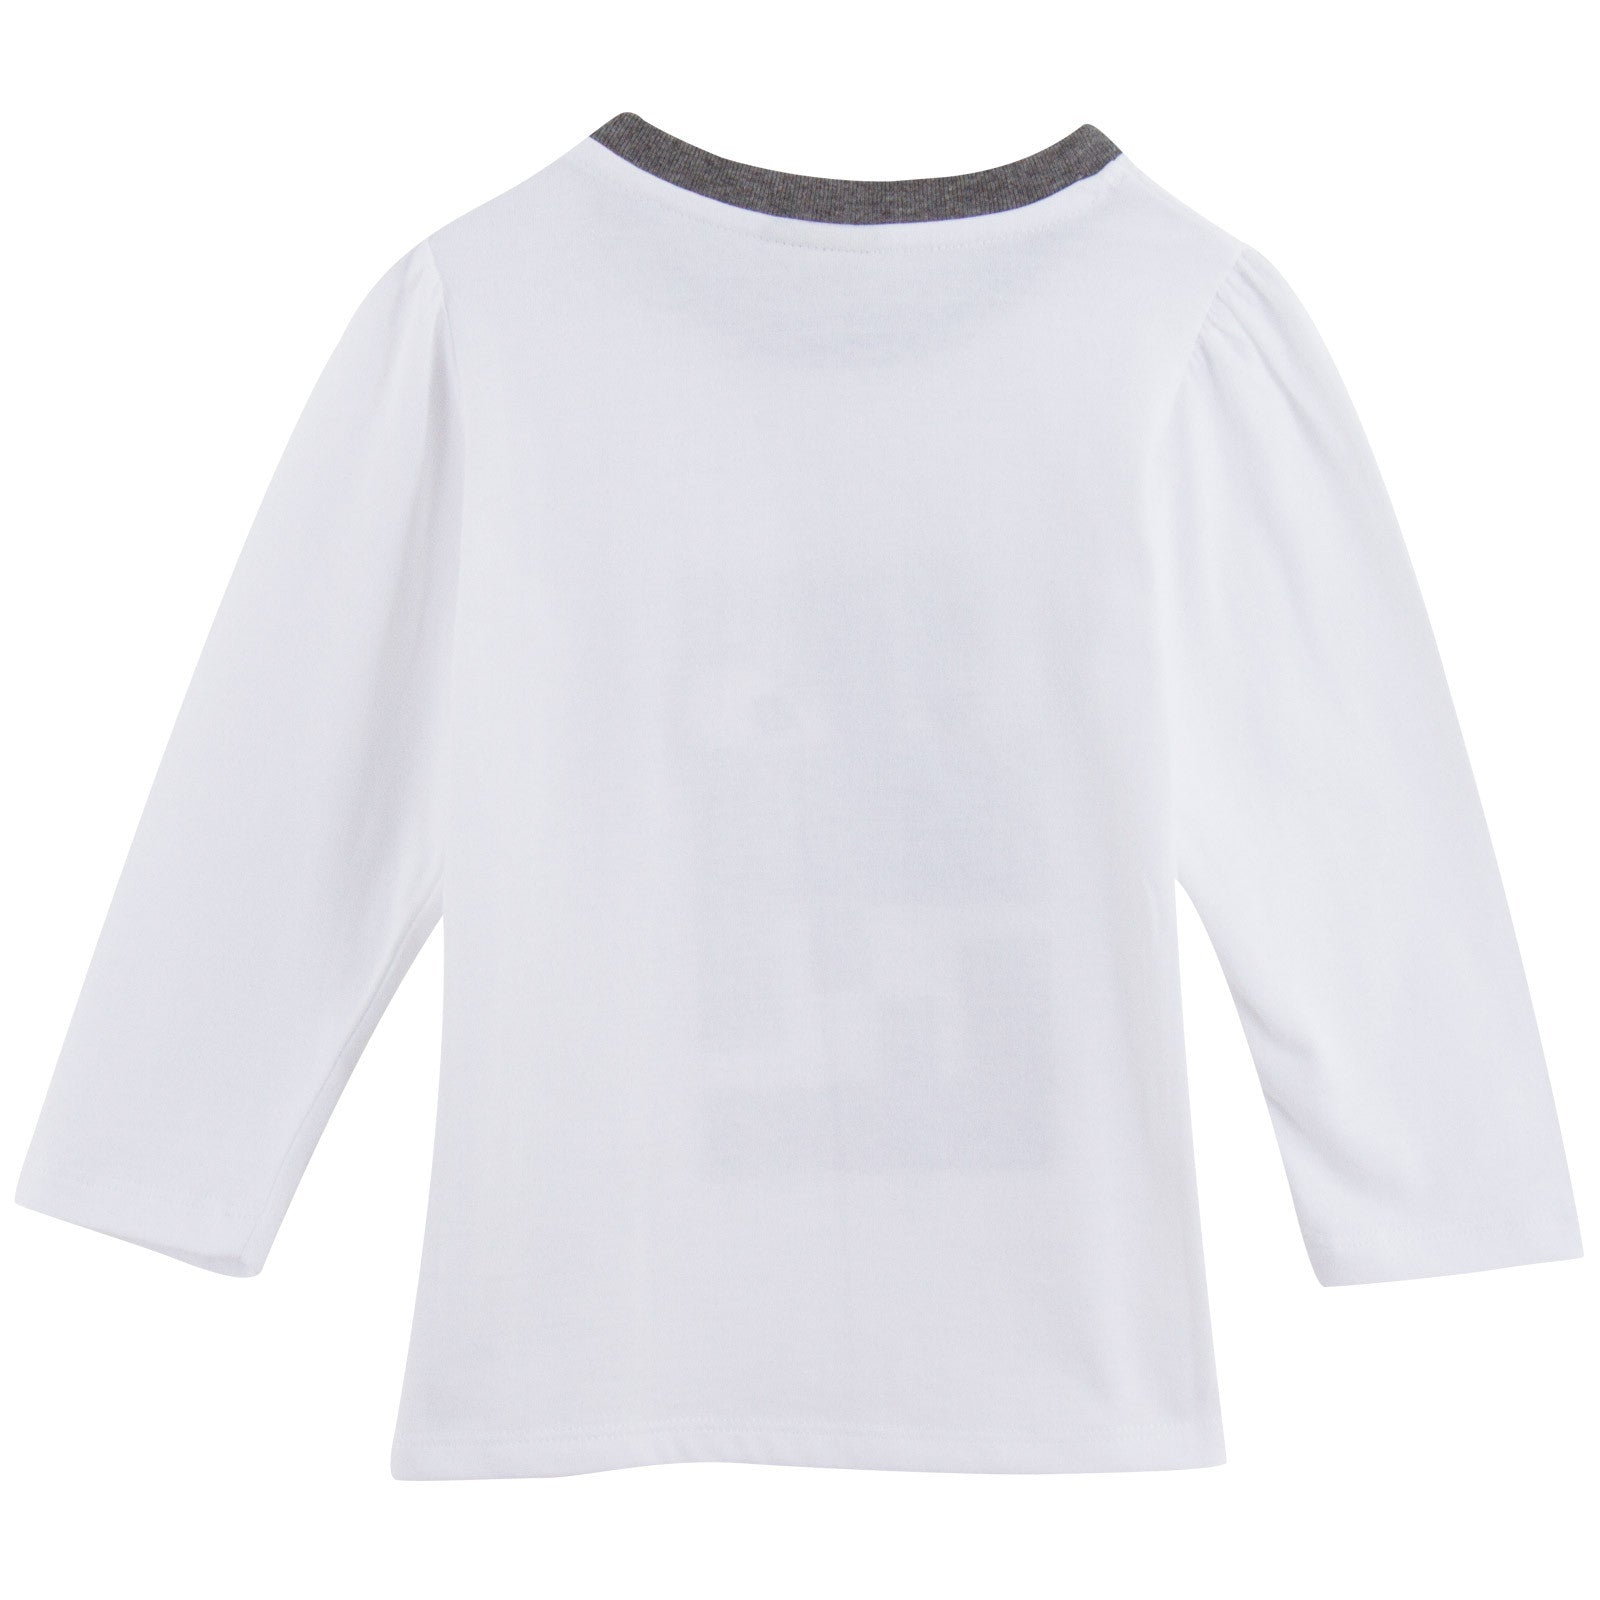 Baby Boys White Cotton Monster Printed T-Shirt - CÉMAROSE | Children's Fashion Store - 2